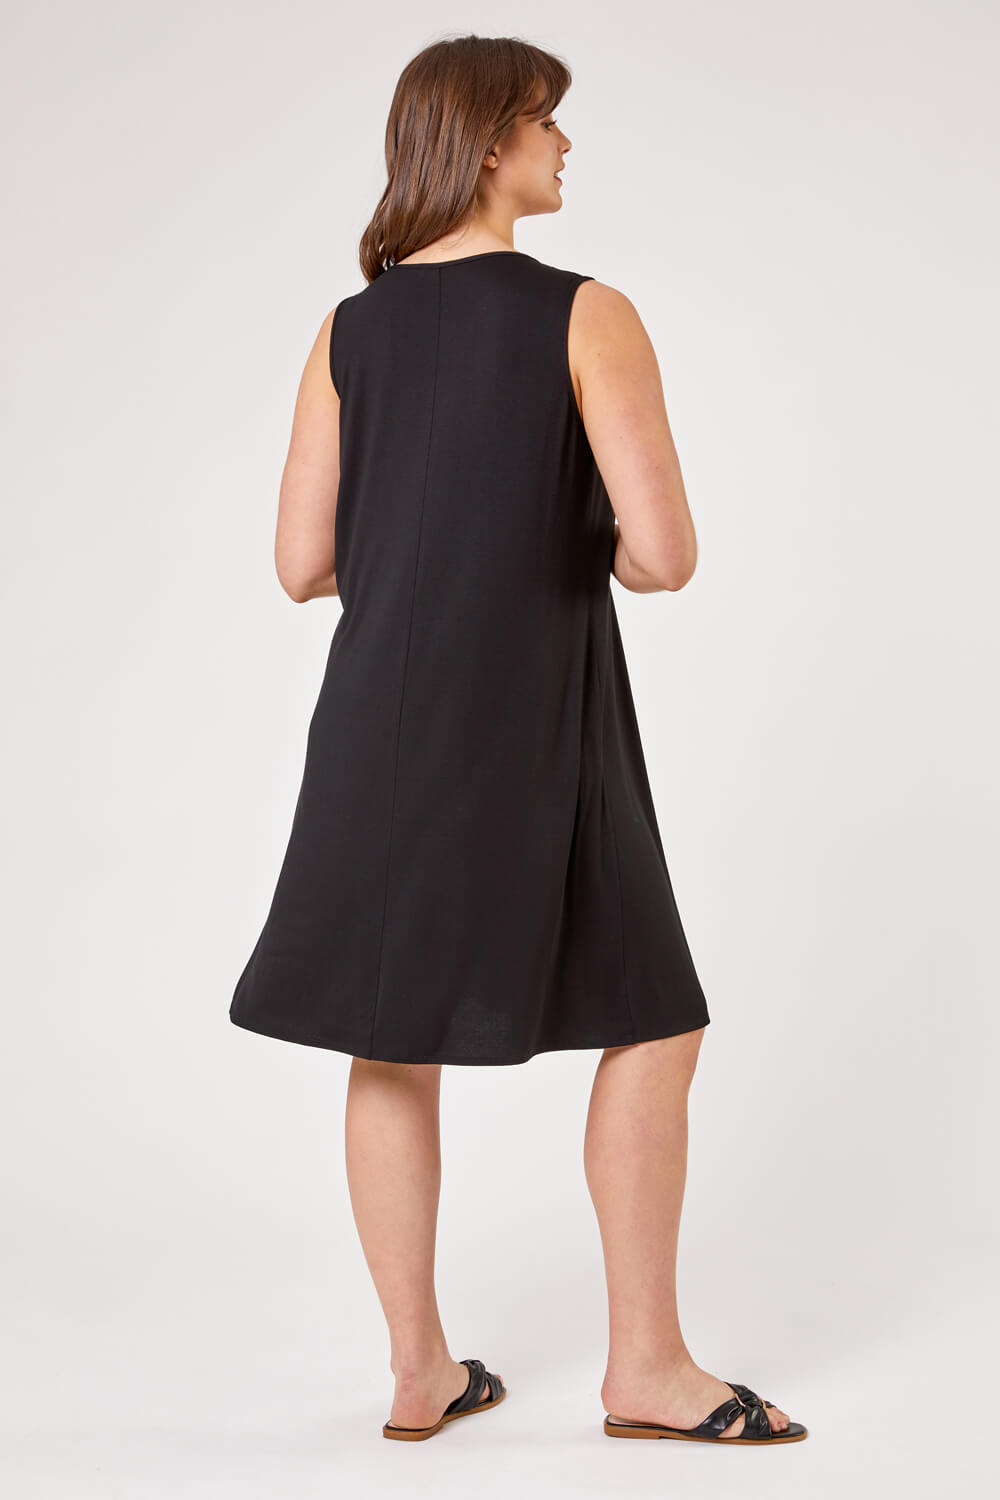 Black Curve Plain Pleat Swing Dress, Image 2 of 4